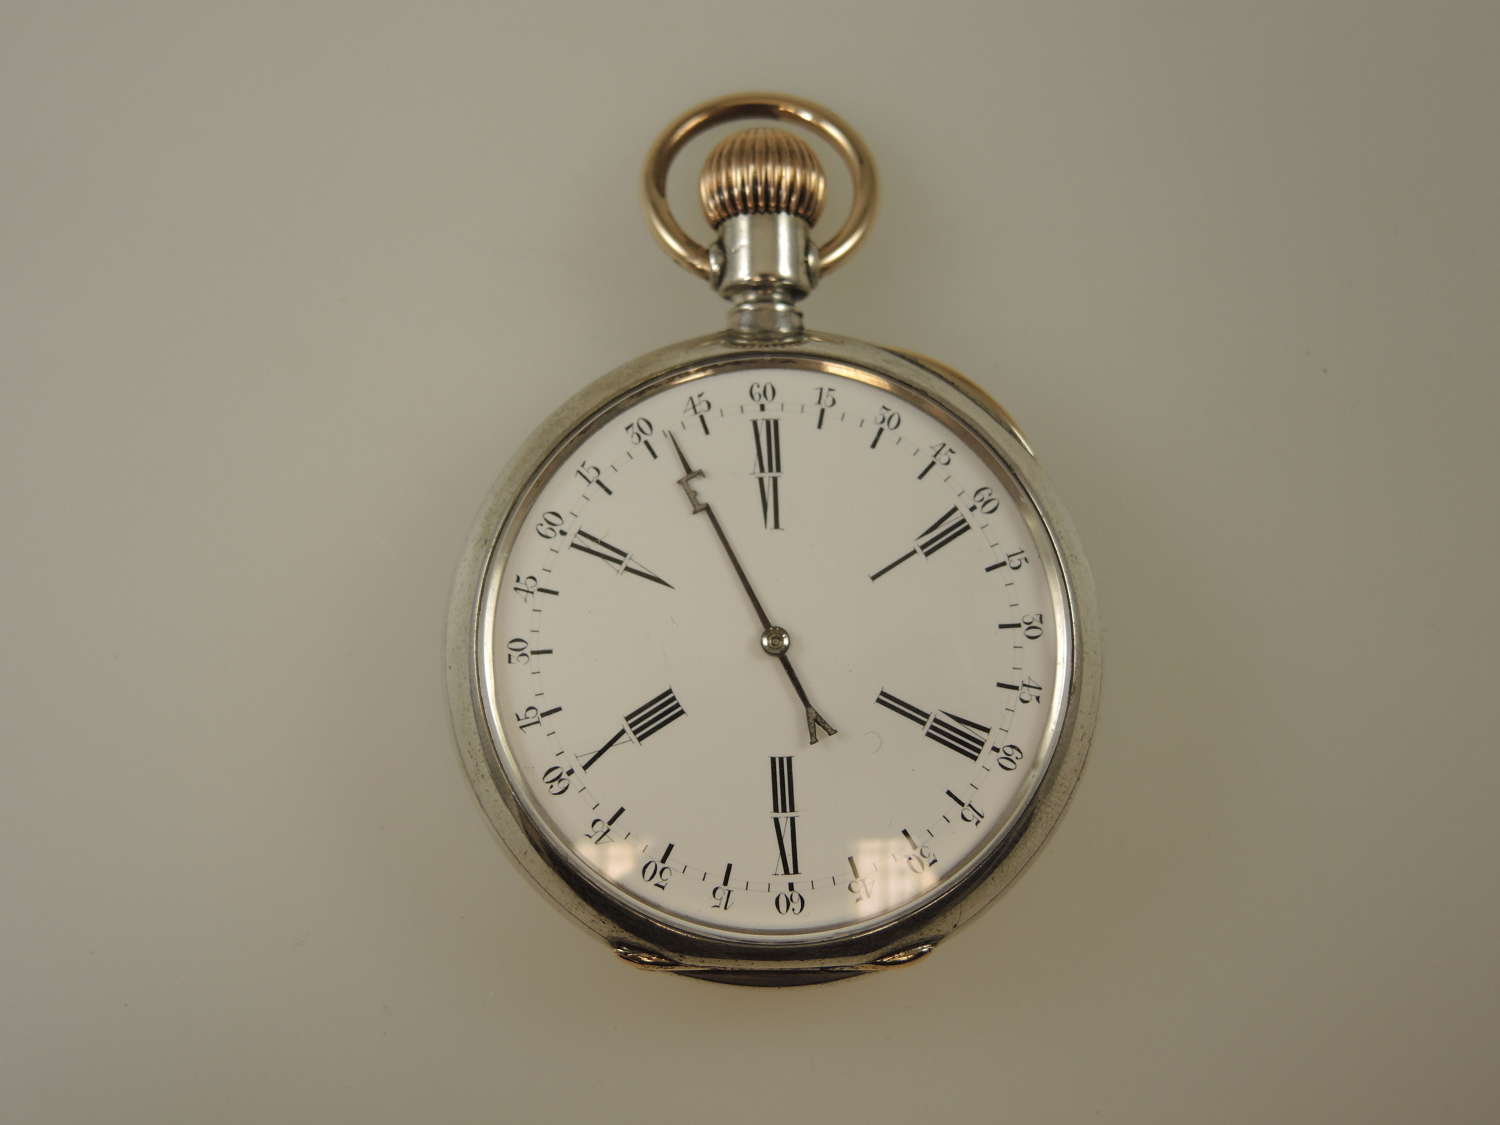 Rare SIX HOUR dial pocket watch by F Vaucher c1880